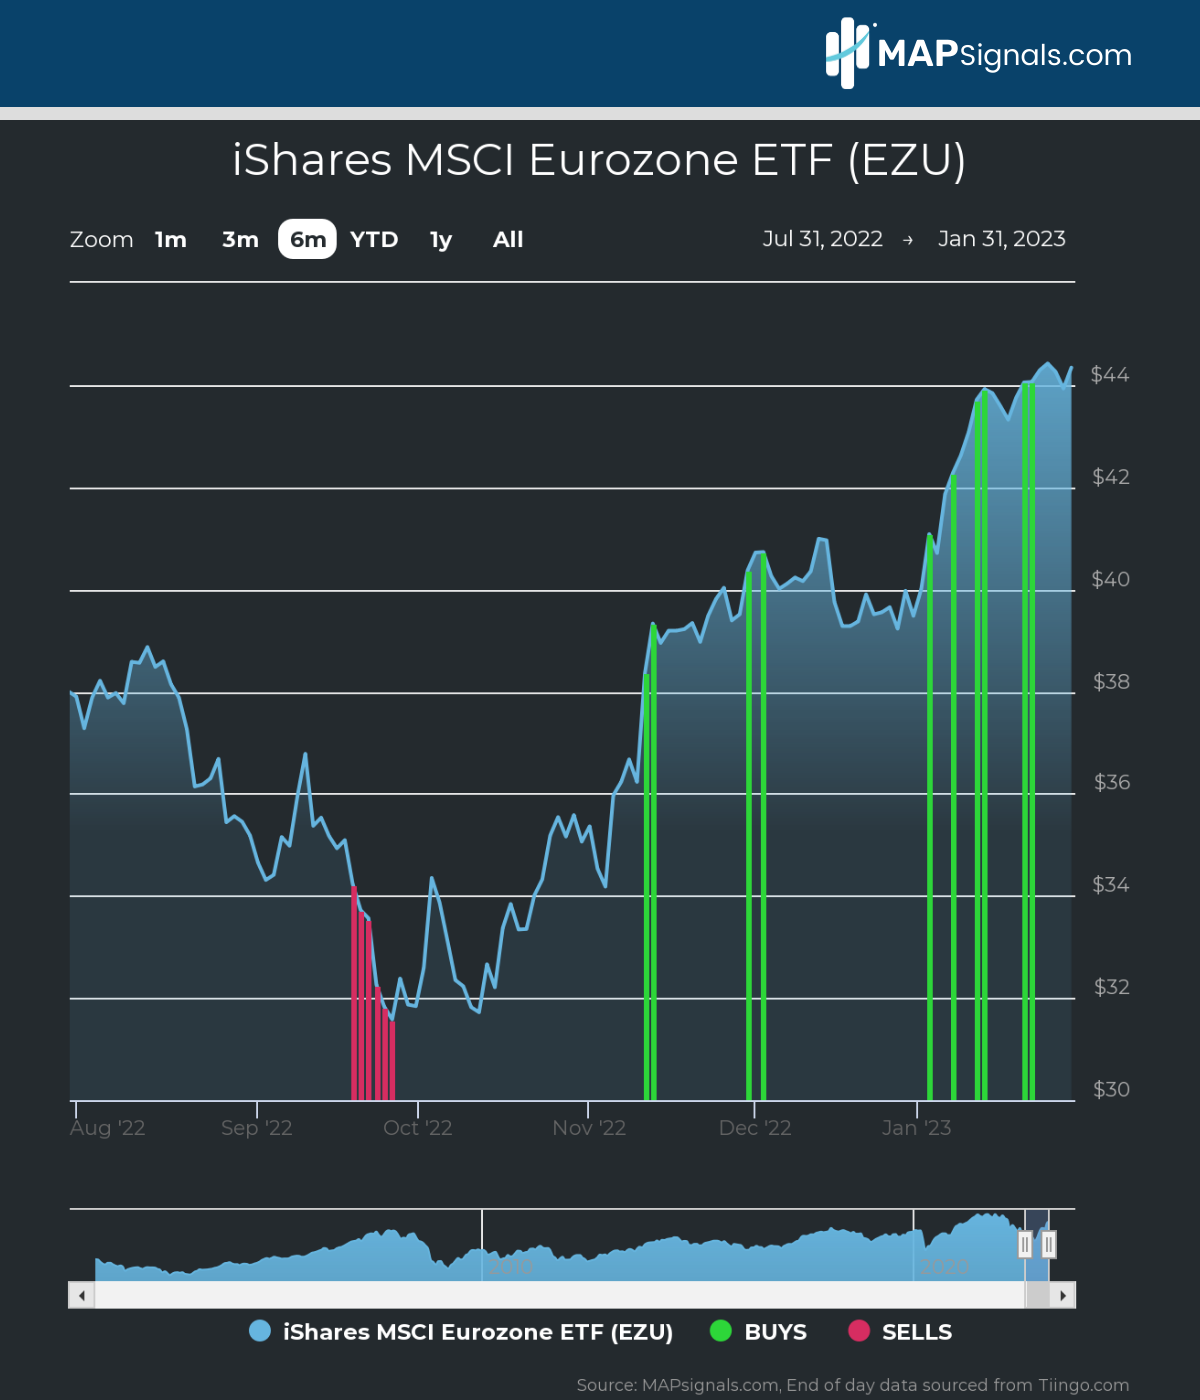 iShares MSCI Eurozone ETF (EZU) | MAPsignals